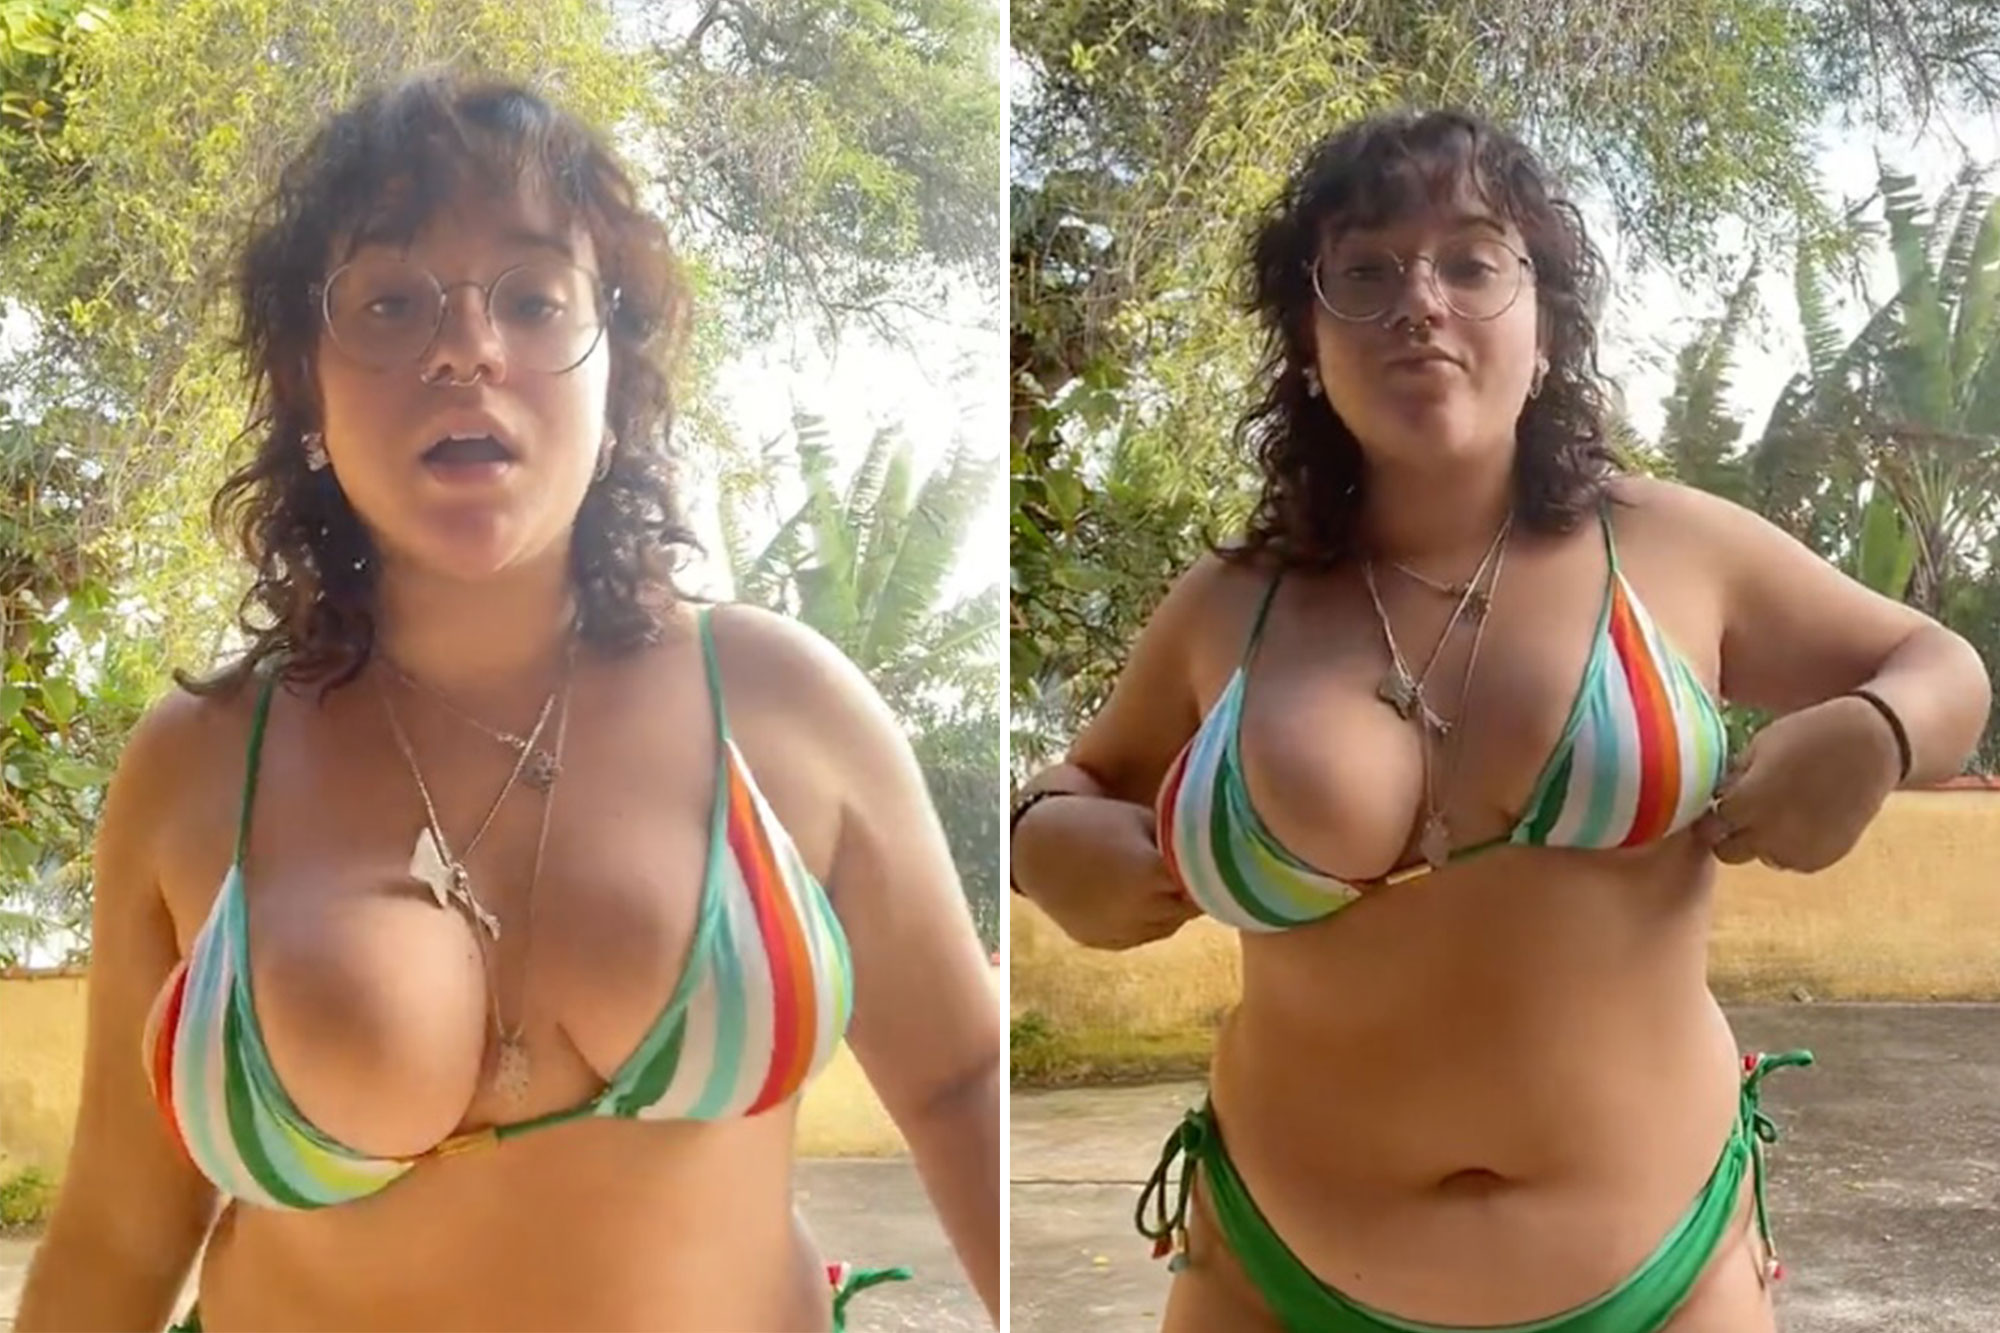 dana geyer share tits too big for bikini photos